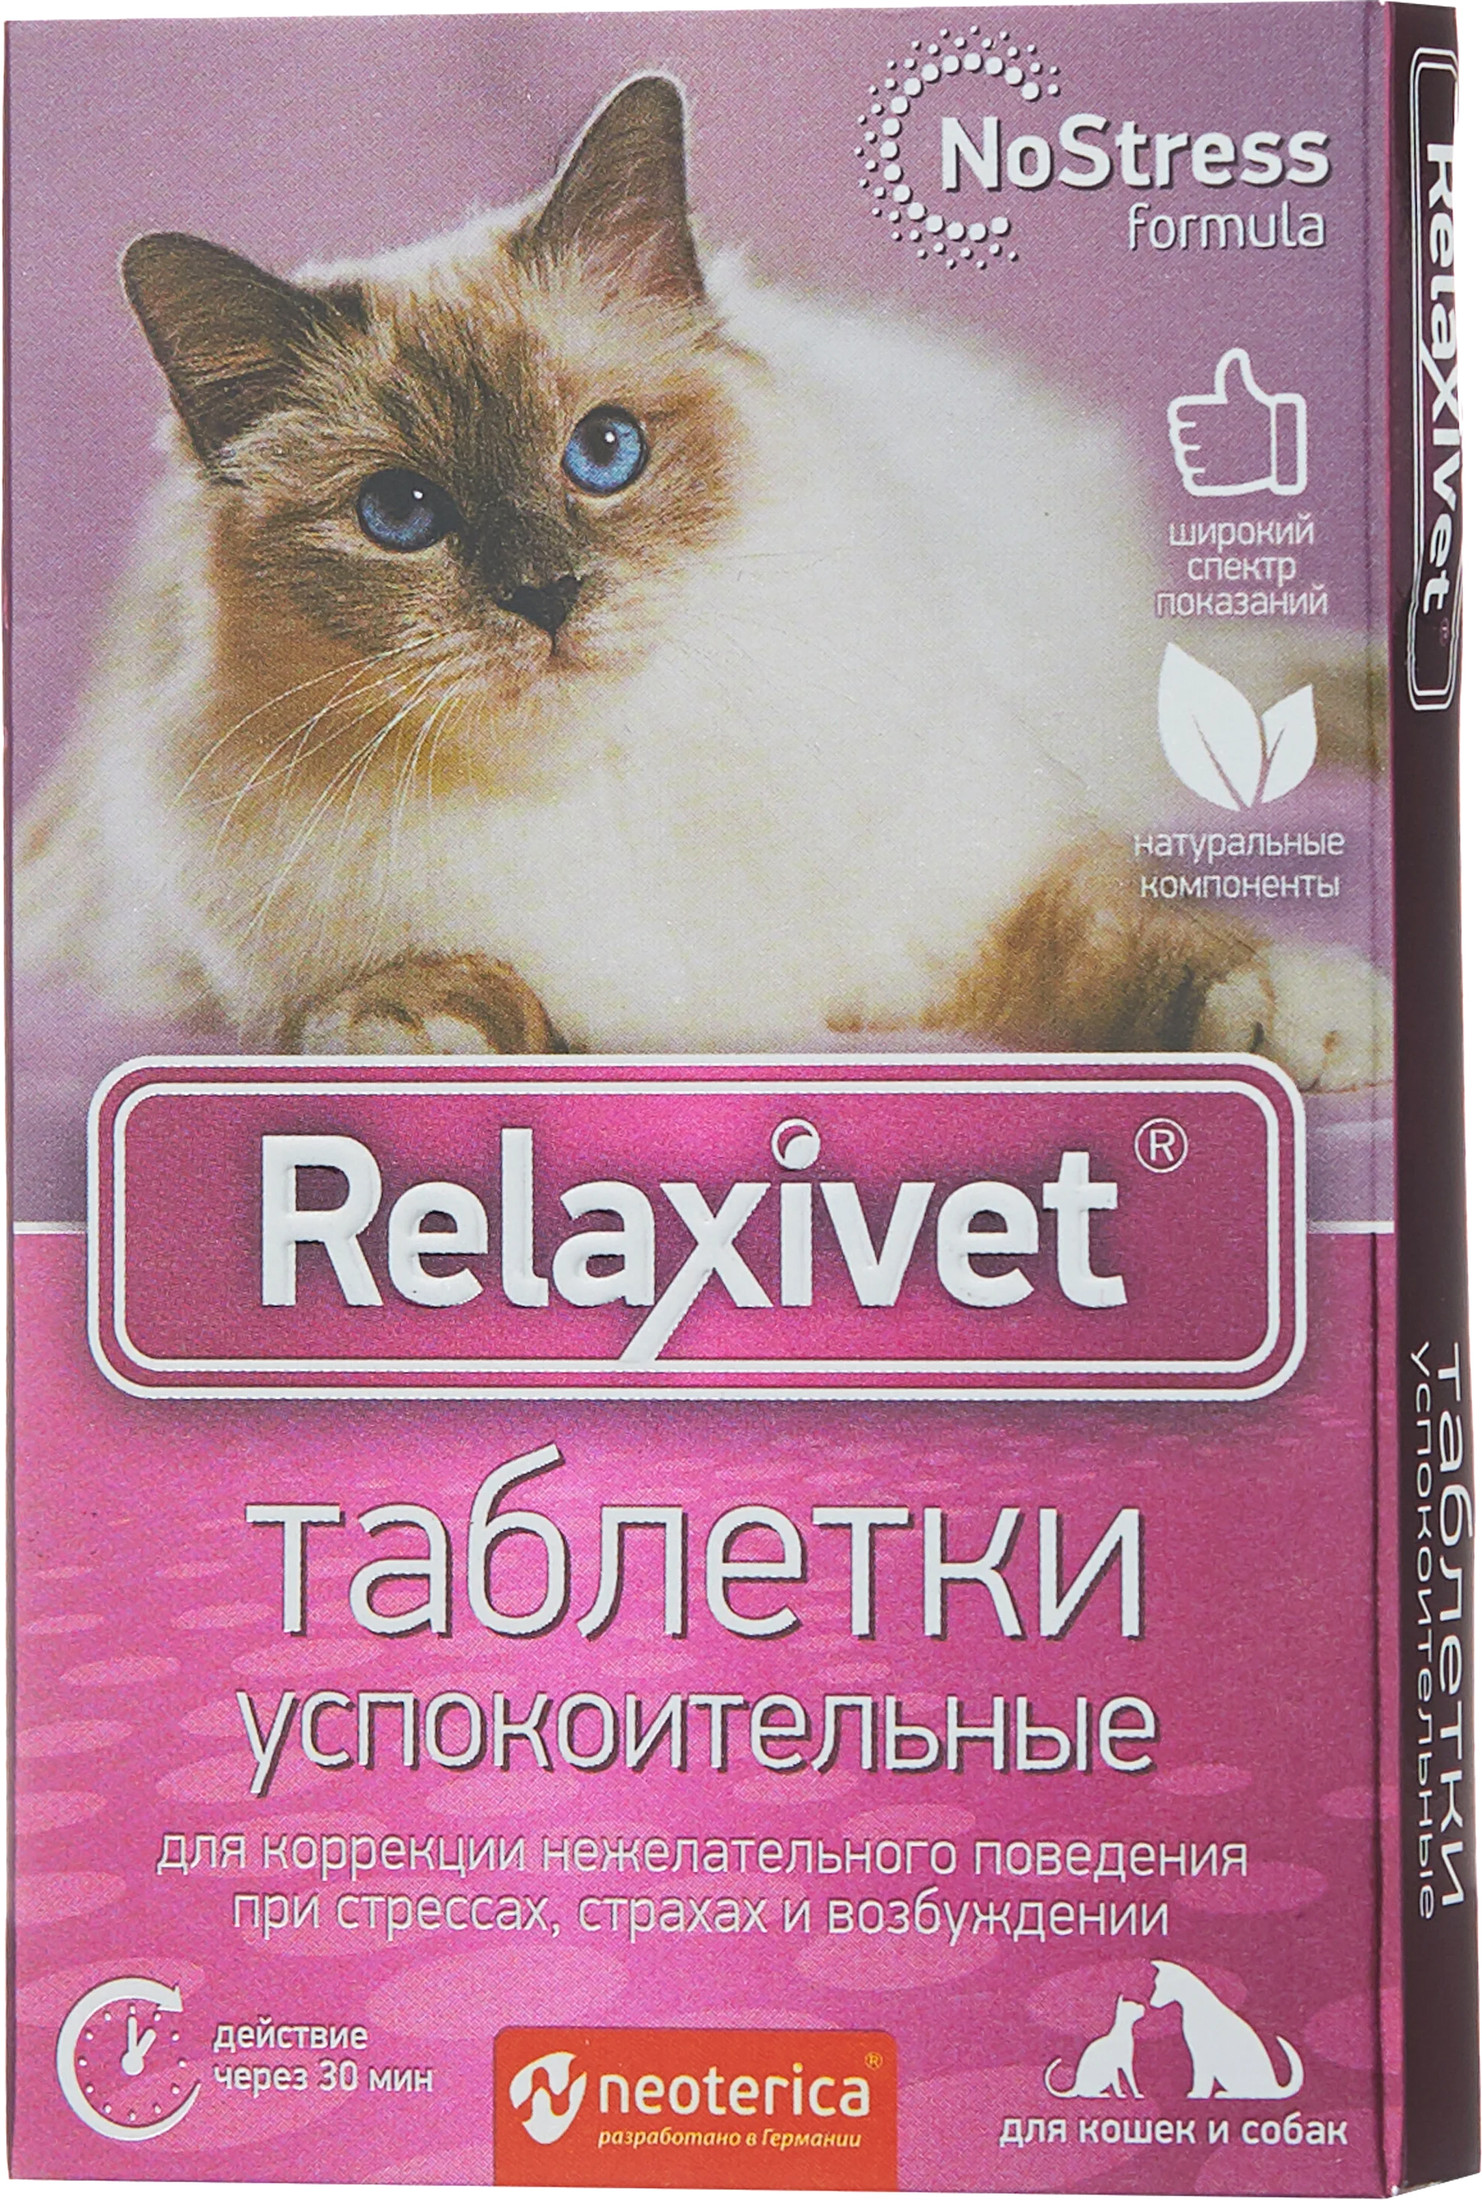 

Таблетки Relaxivet X108 (10 шт)